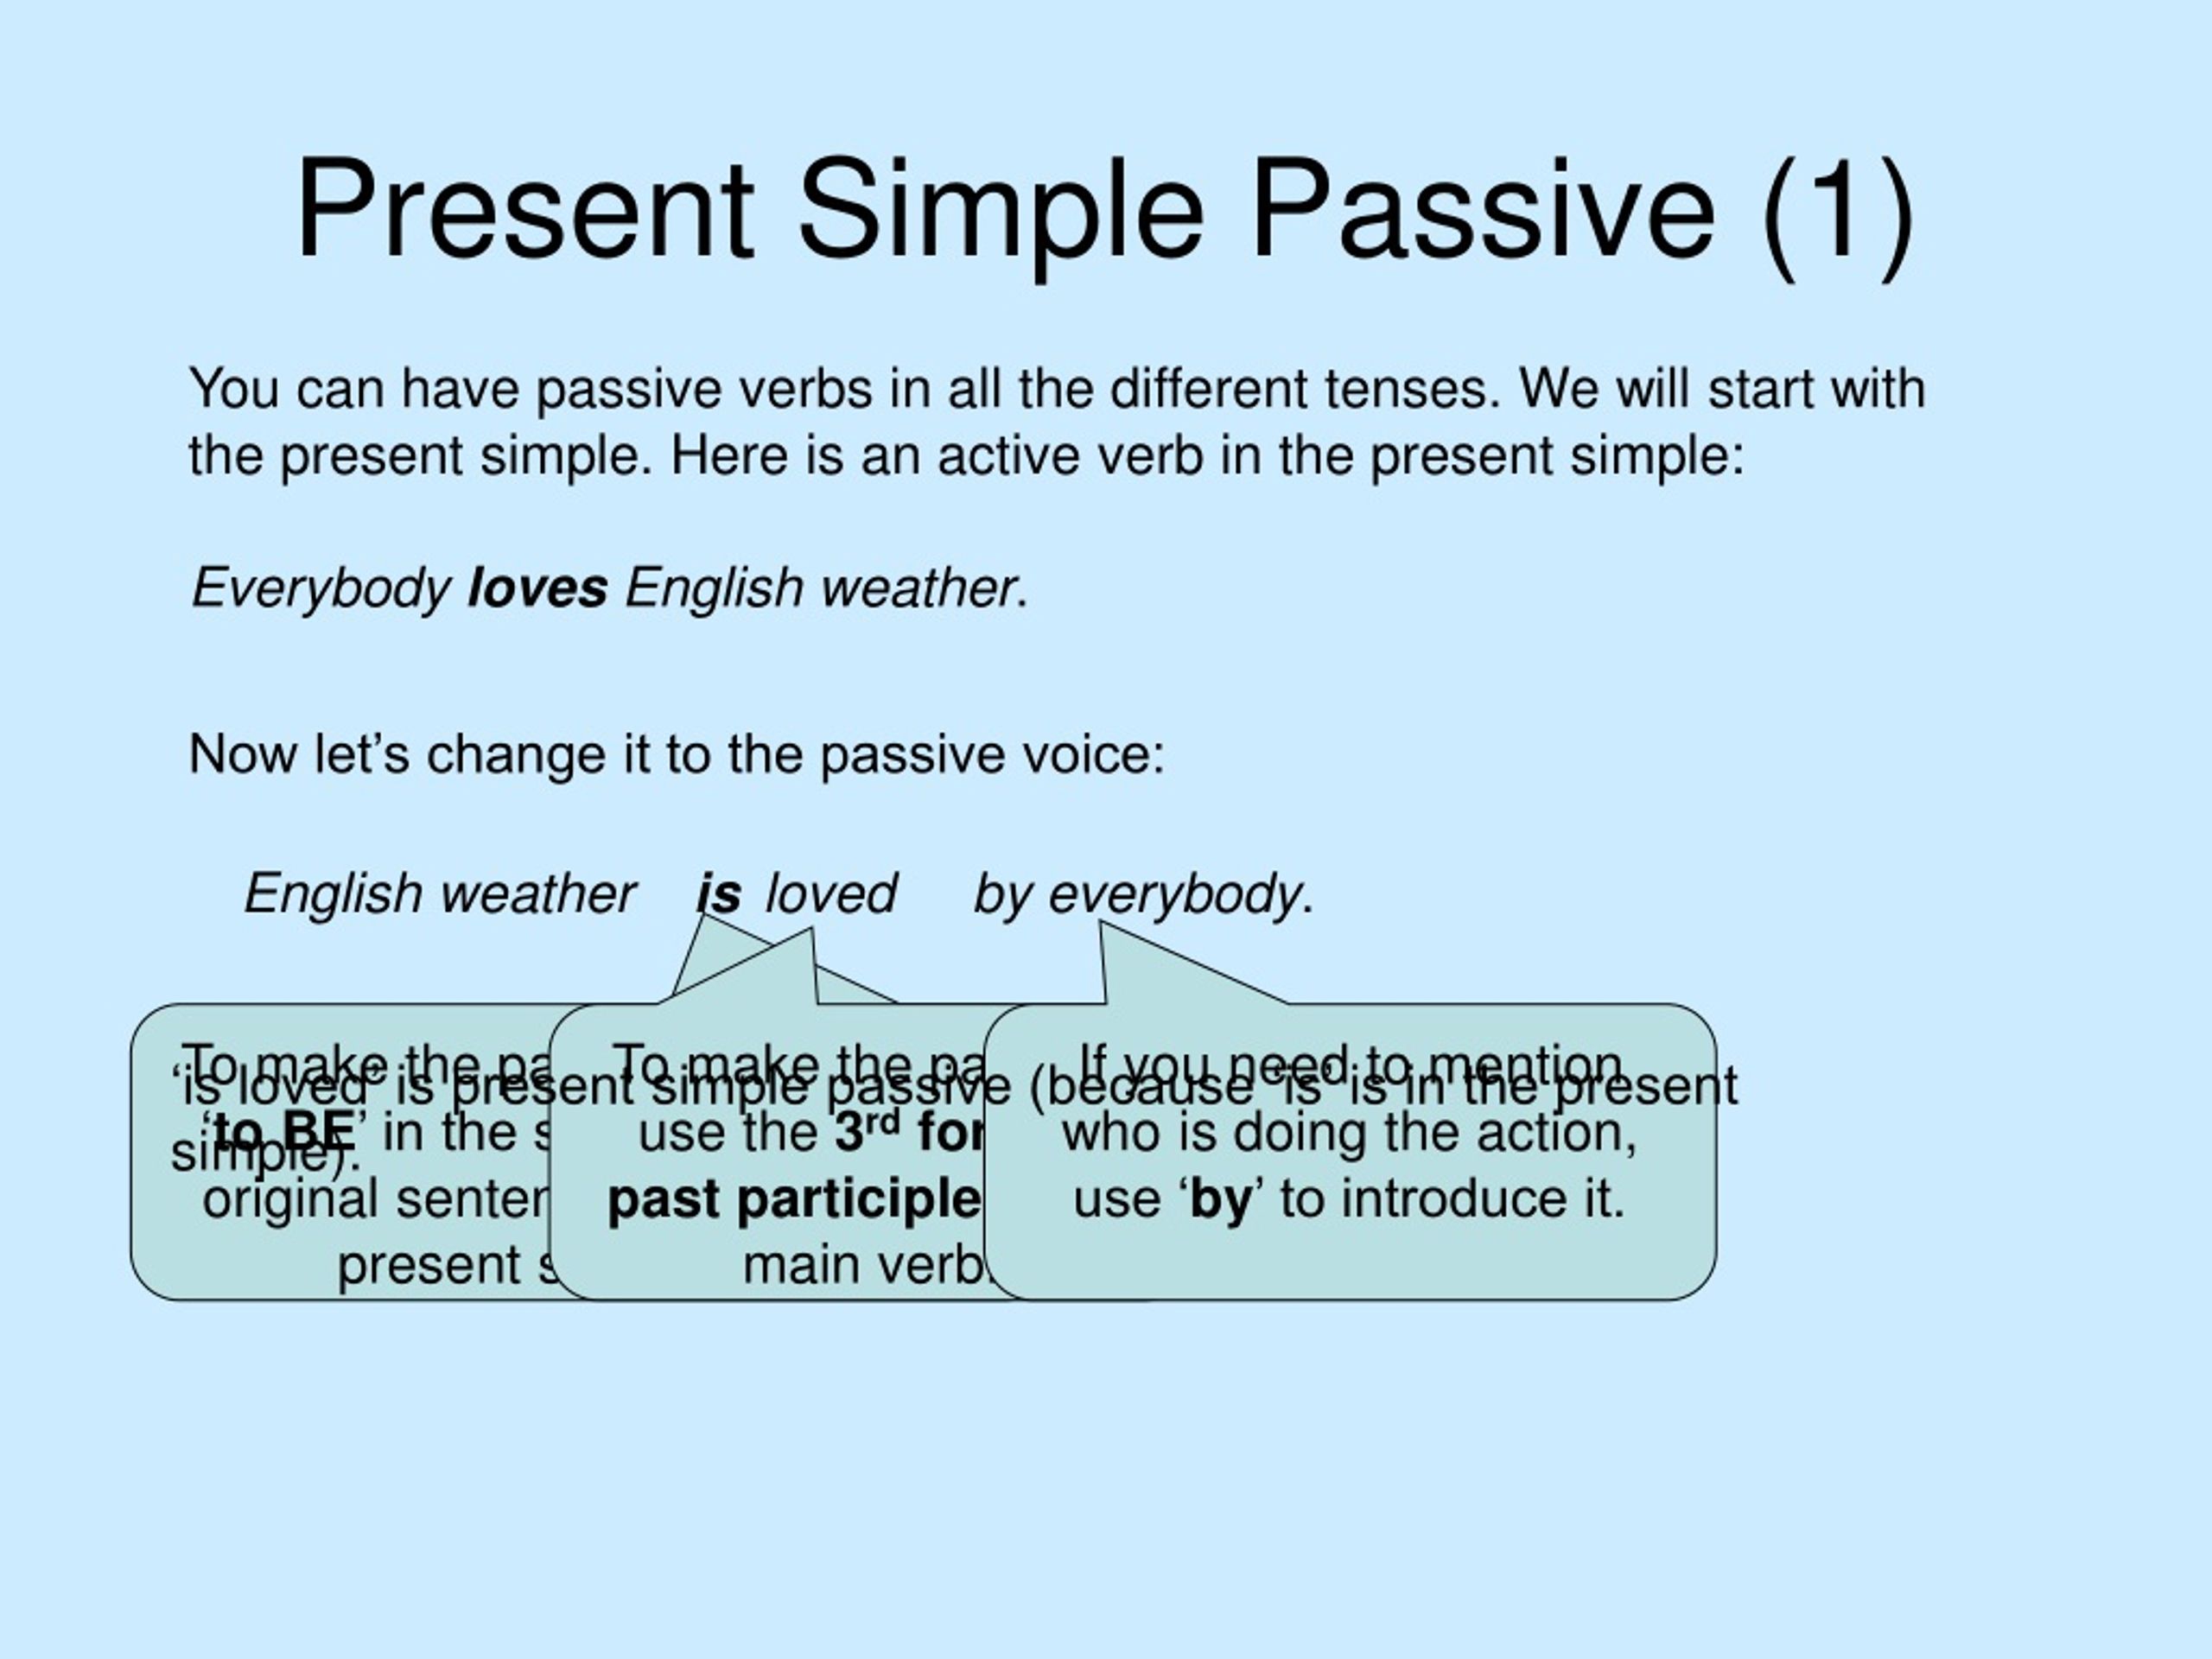 present passive presentation